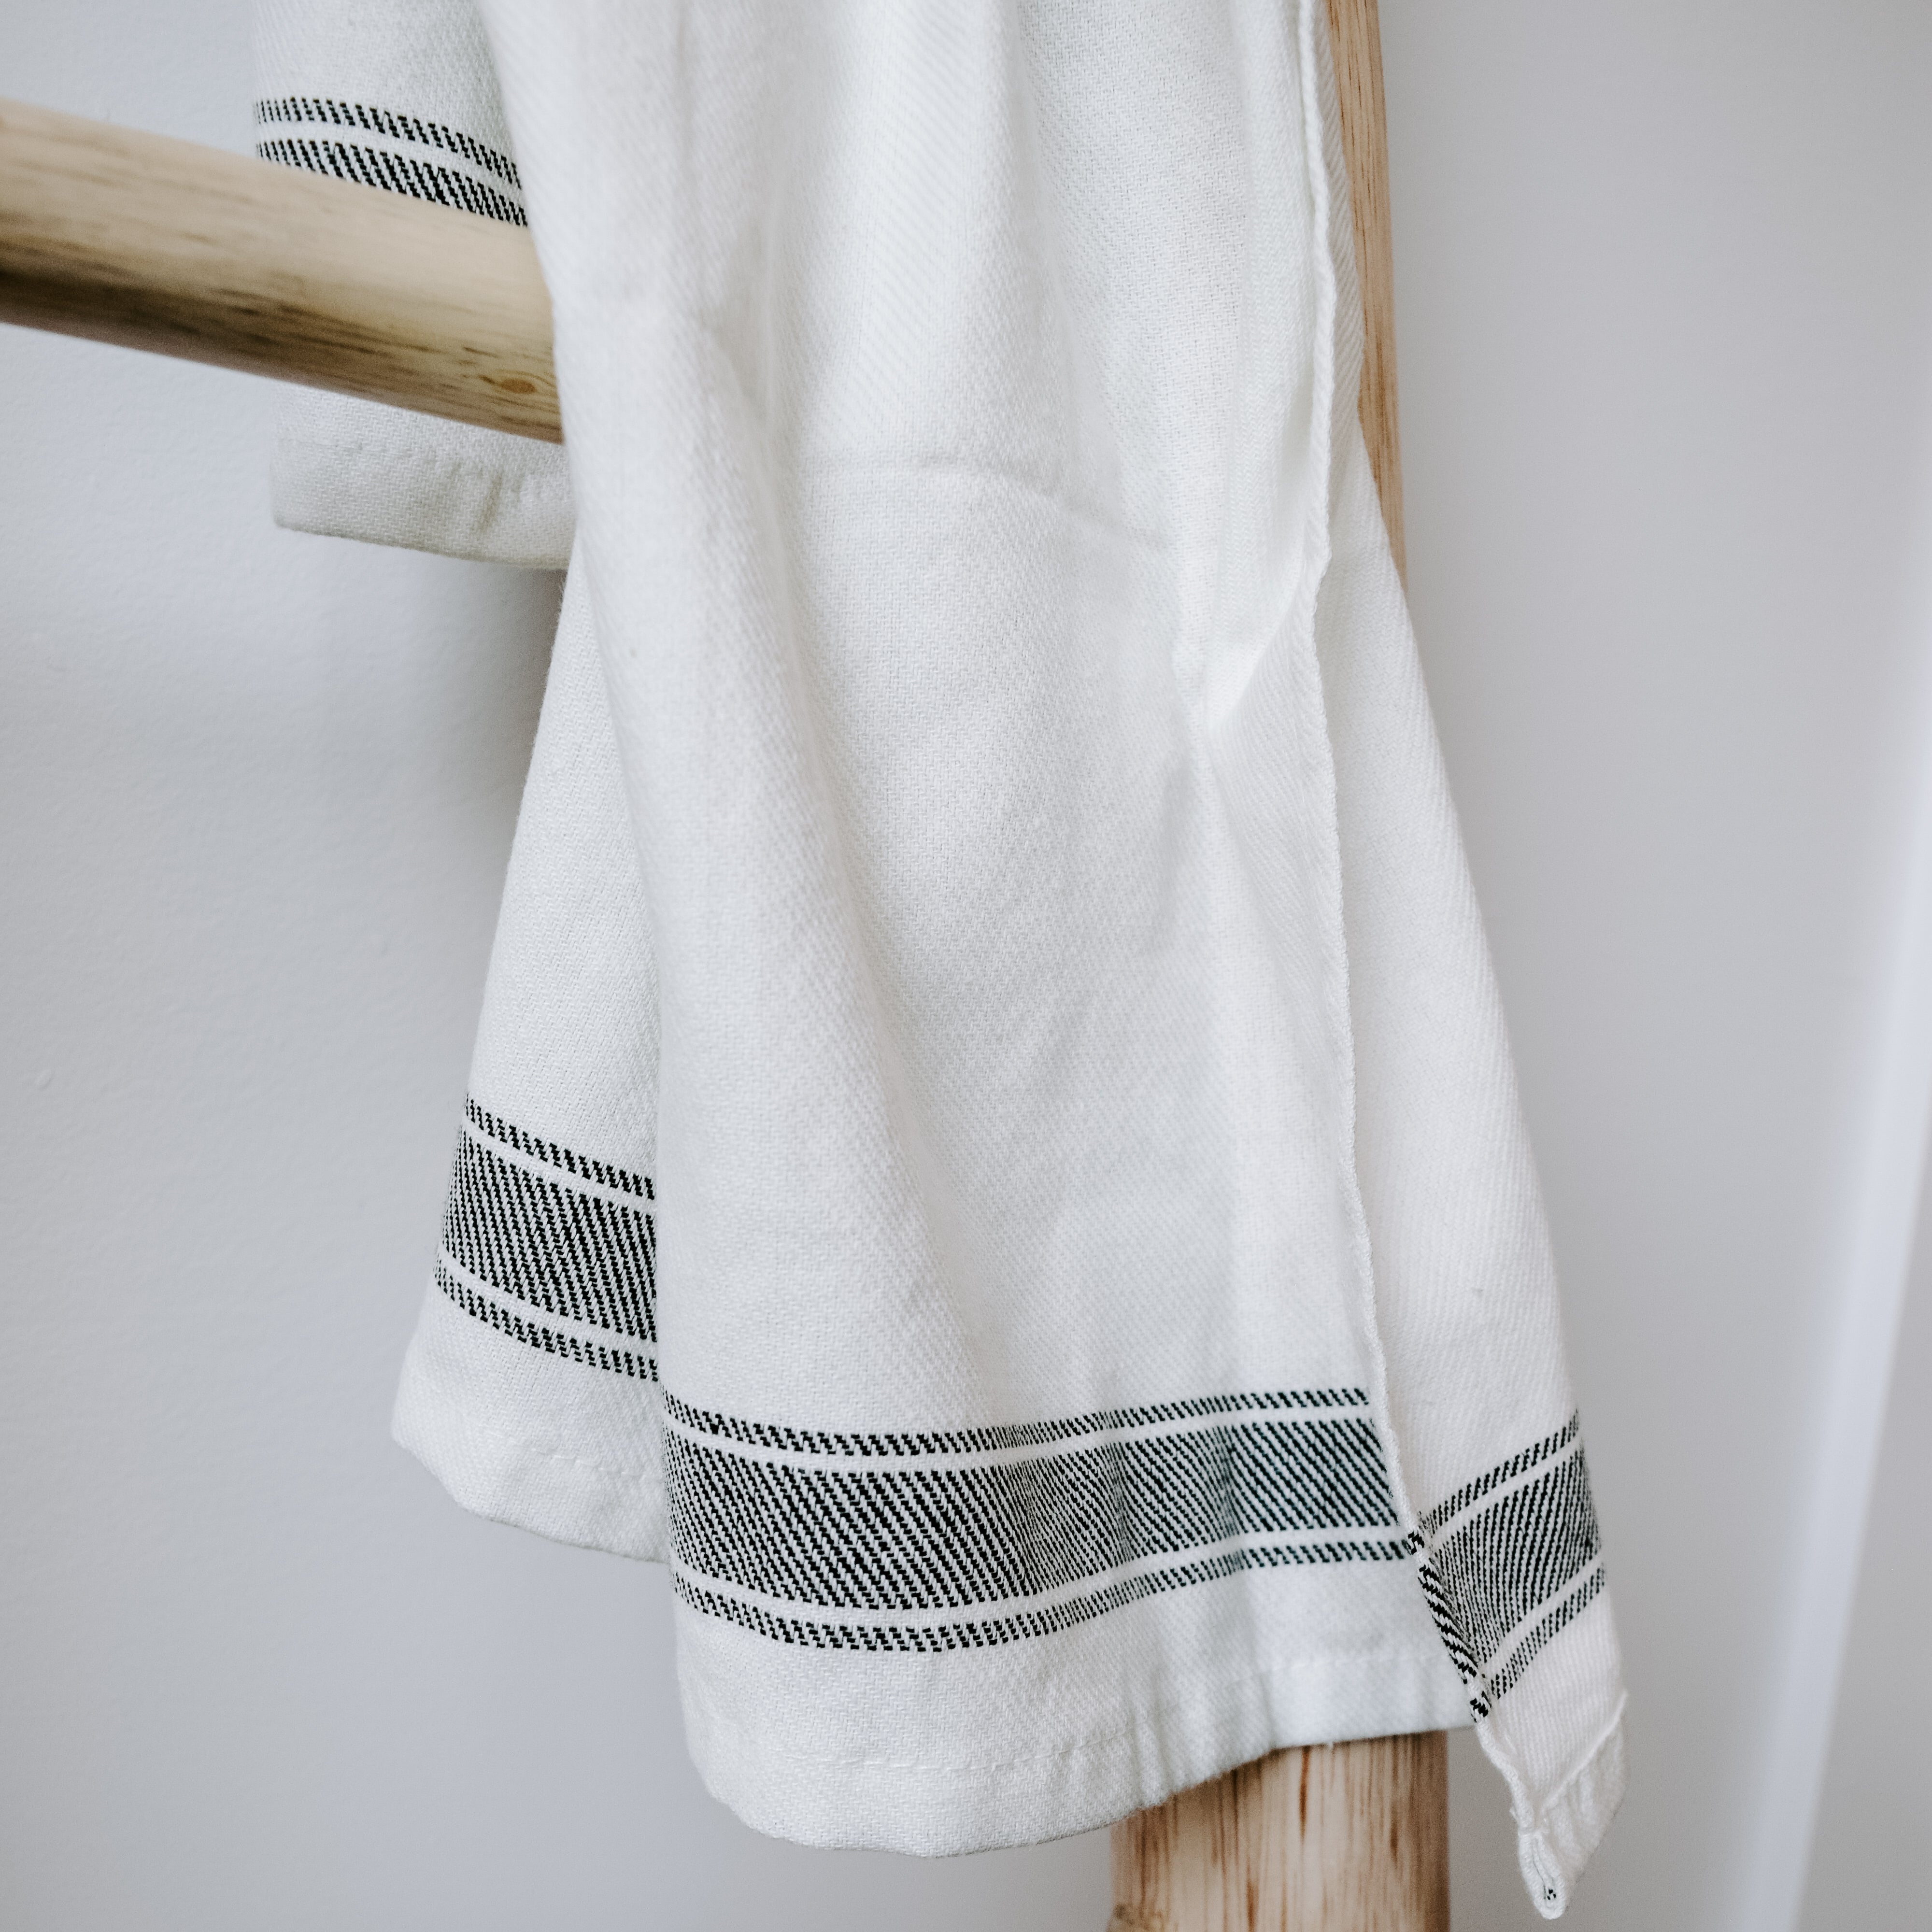 SWEET WATER DECOR Horizontal Striped Tea Towel- Three Stripes